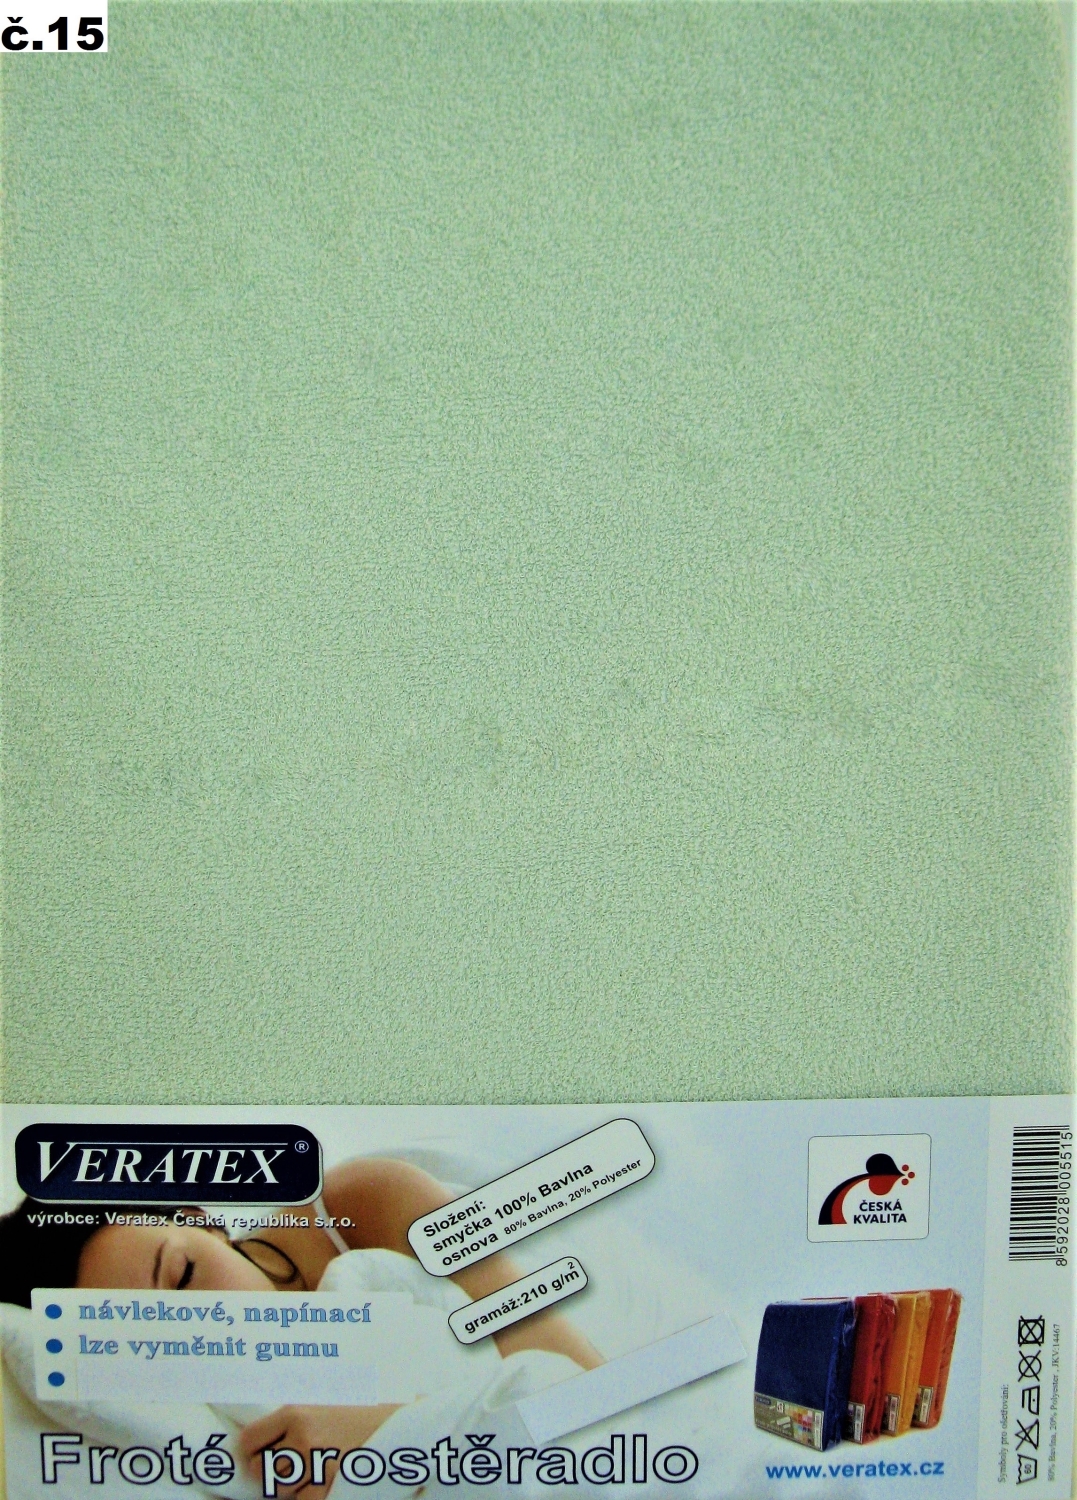 Veratex Froté prostěradlo 200 x 240 cm (č.15 sv.zelená) 200 x 240 cm